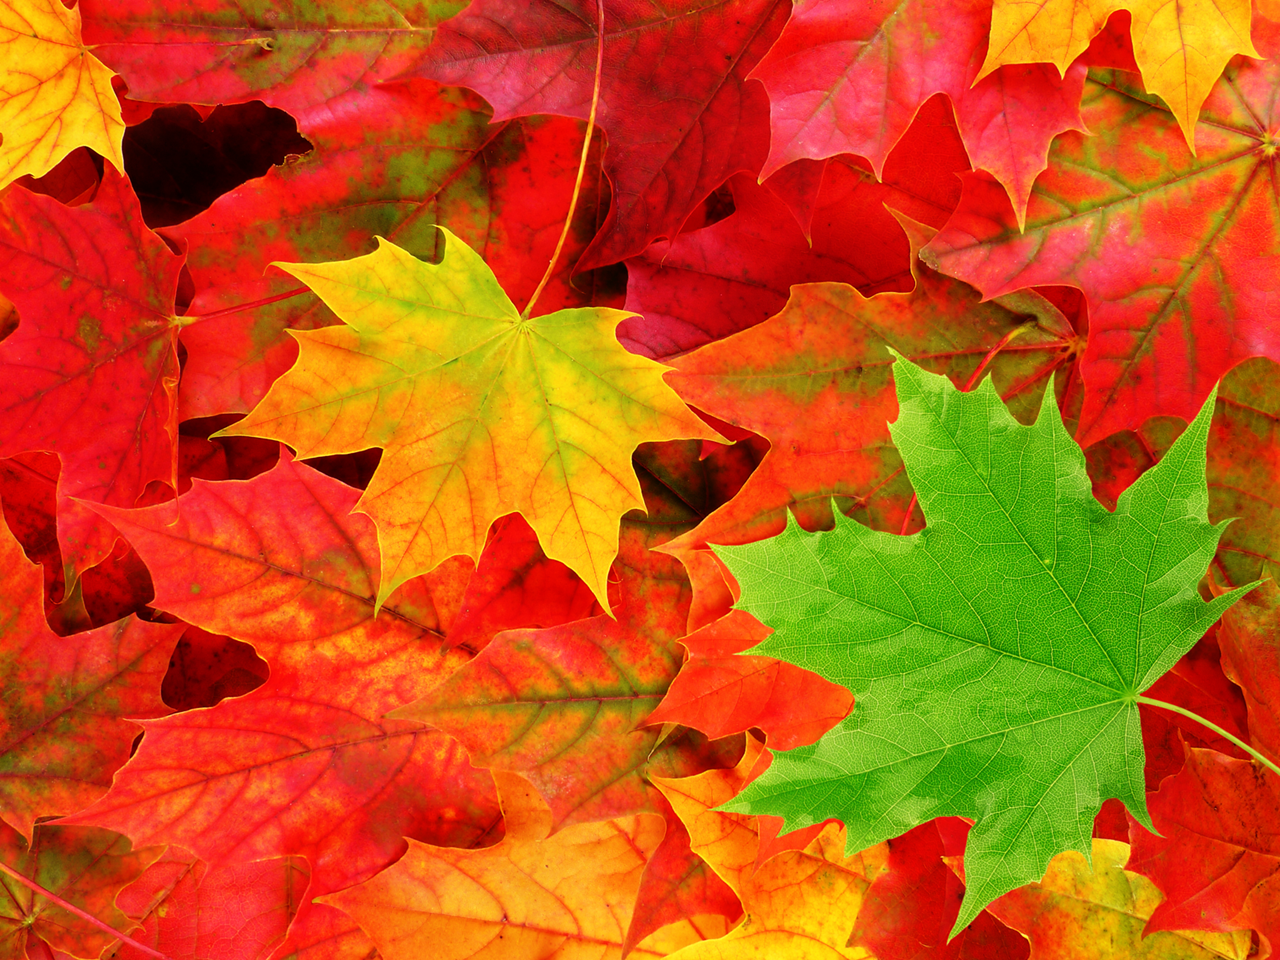 Autumn Leaves HD Widescreen Wallpaper Download, Joseph Elsworth